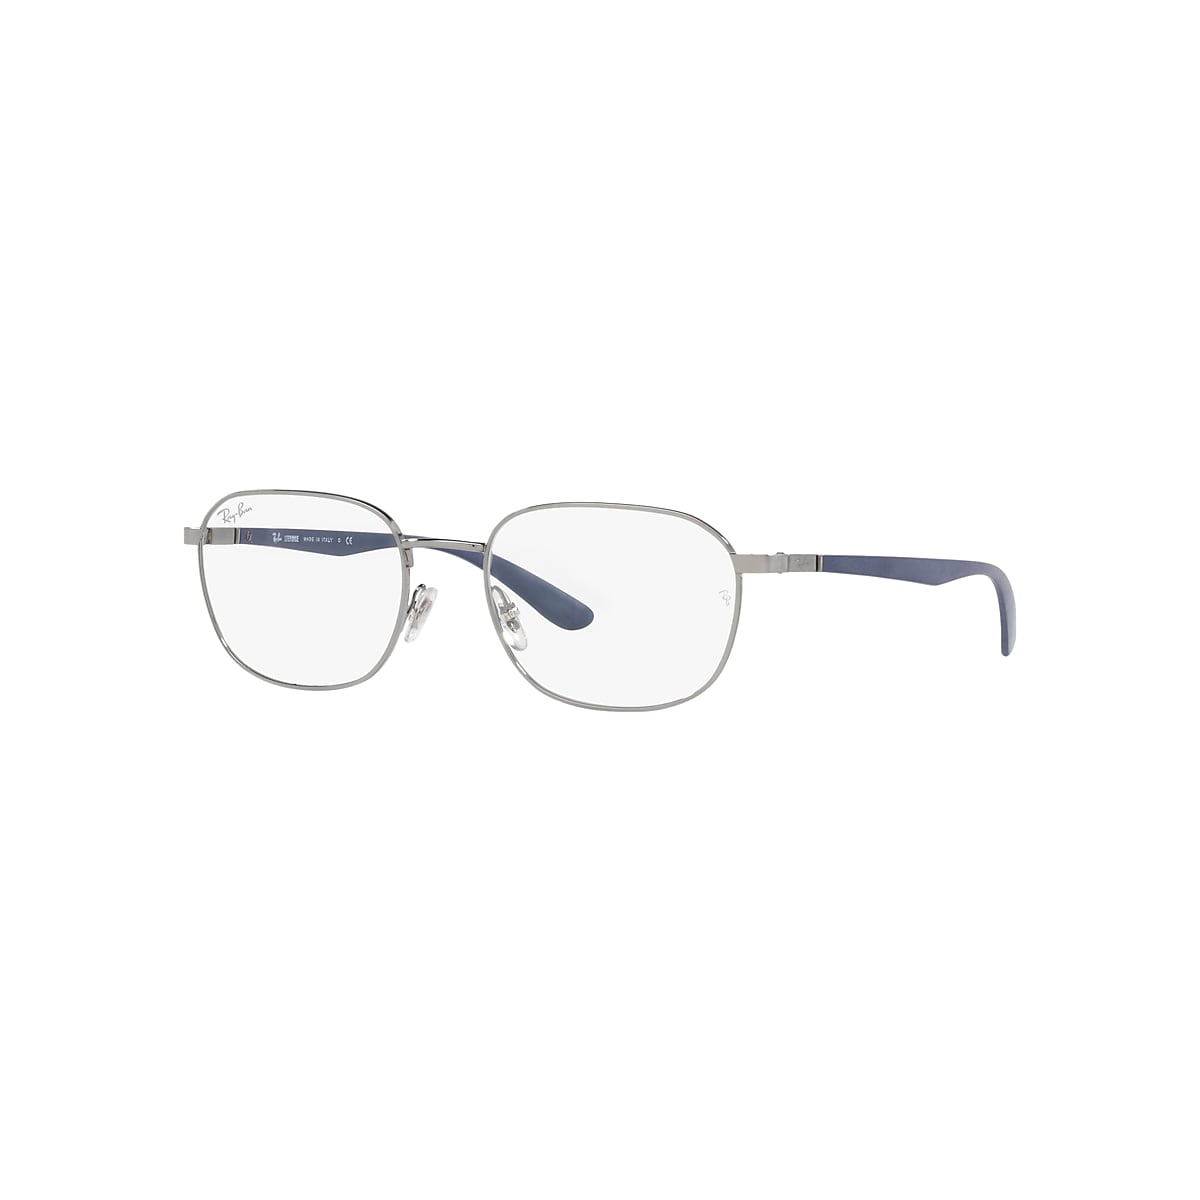 RB6462 OPTICS Eyeglasses with Gunmetal Frame - RB6462